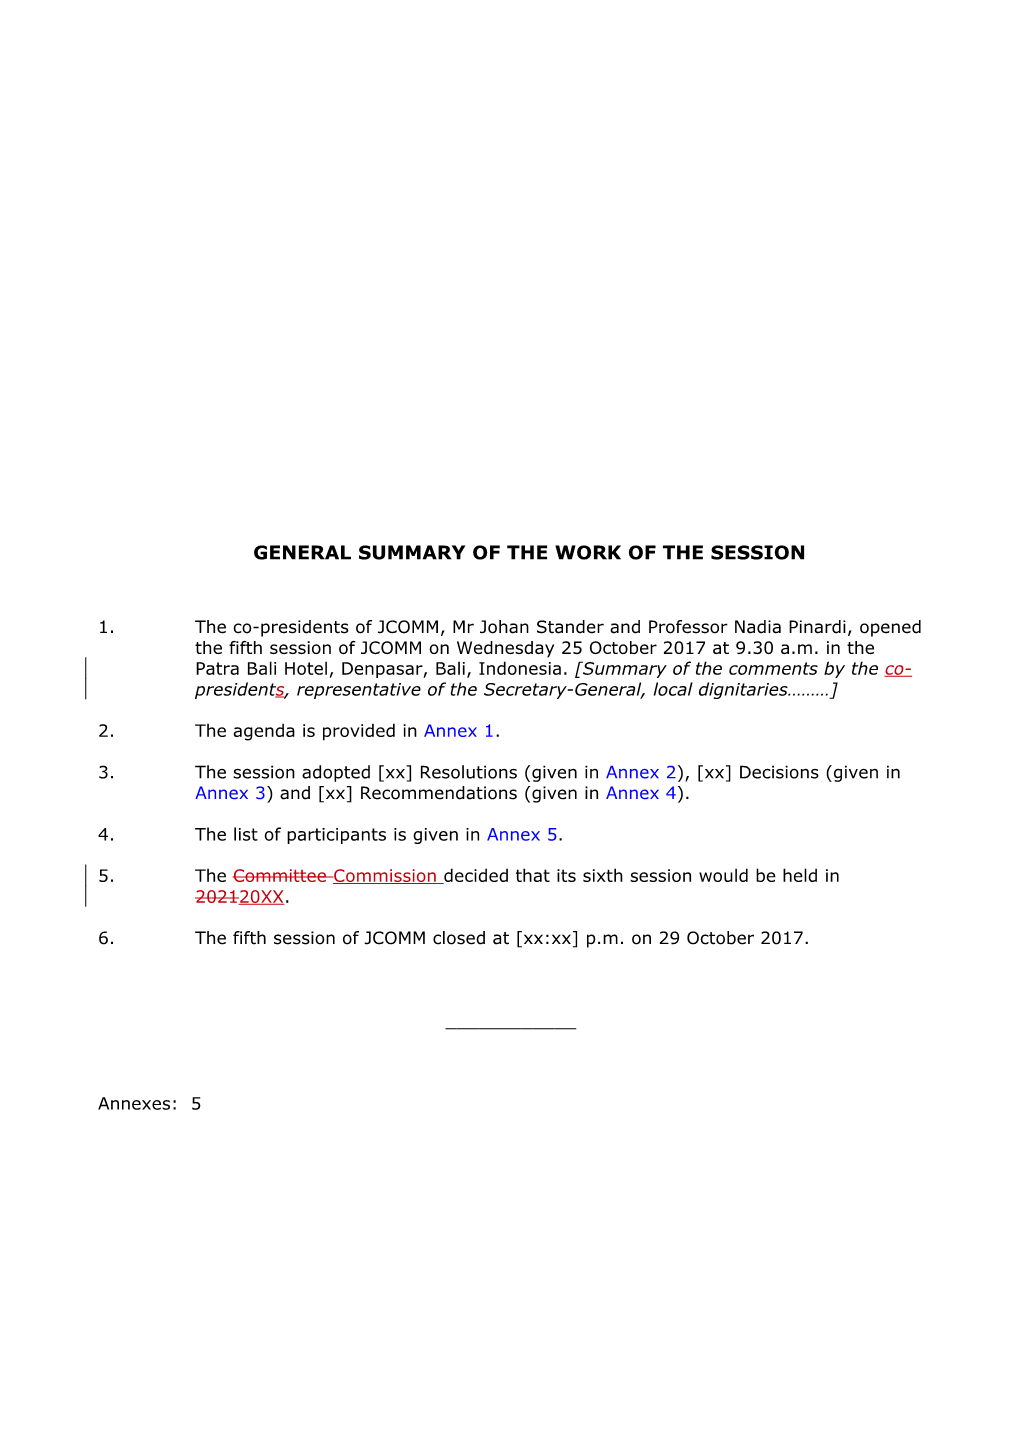 Agenda Item 1:Organization of the Session